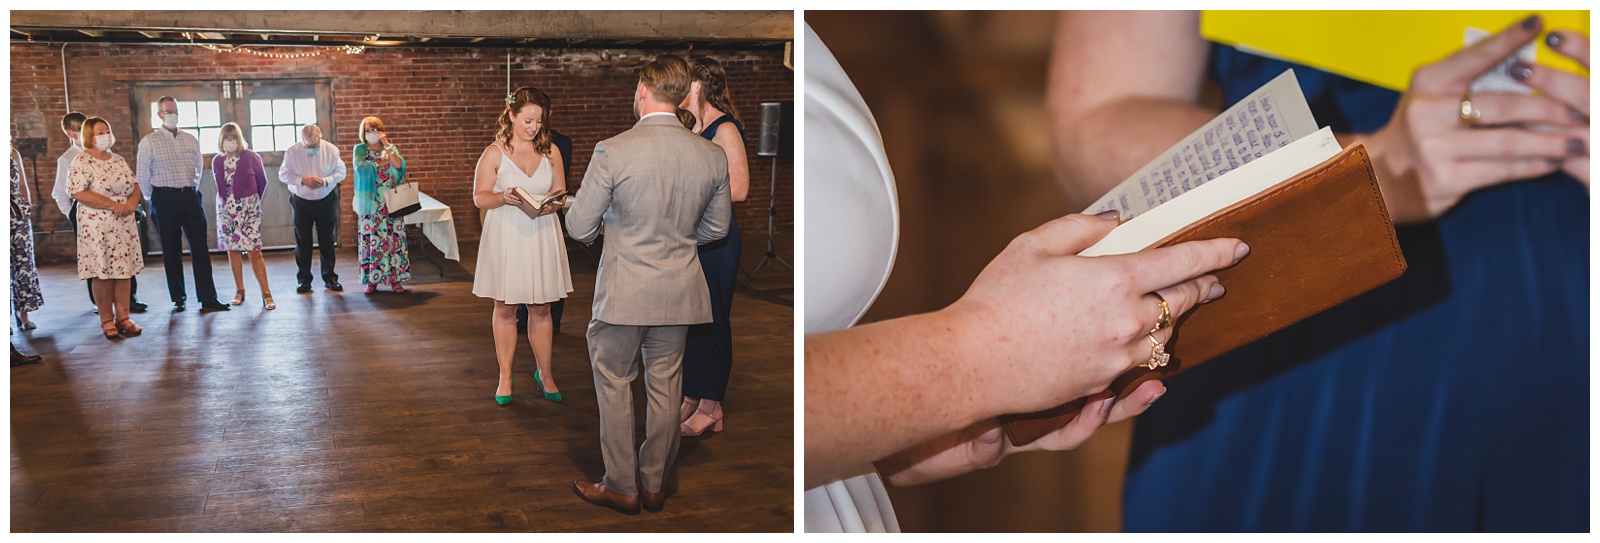 Wedding photography at Lifted Spirits Distillery by Kansas City wedding photographers Wisdom-Watson Weddings.